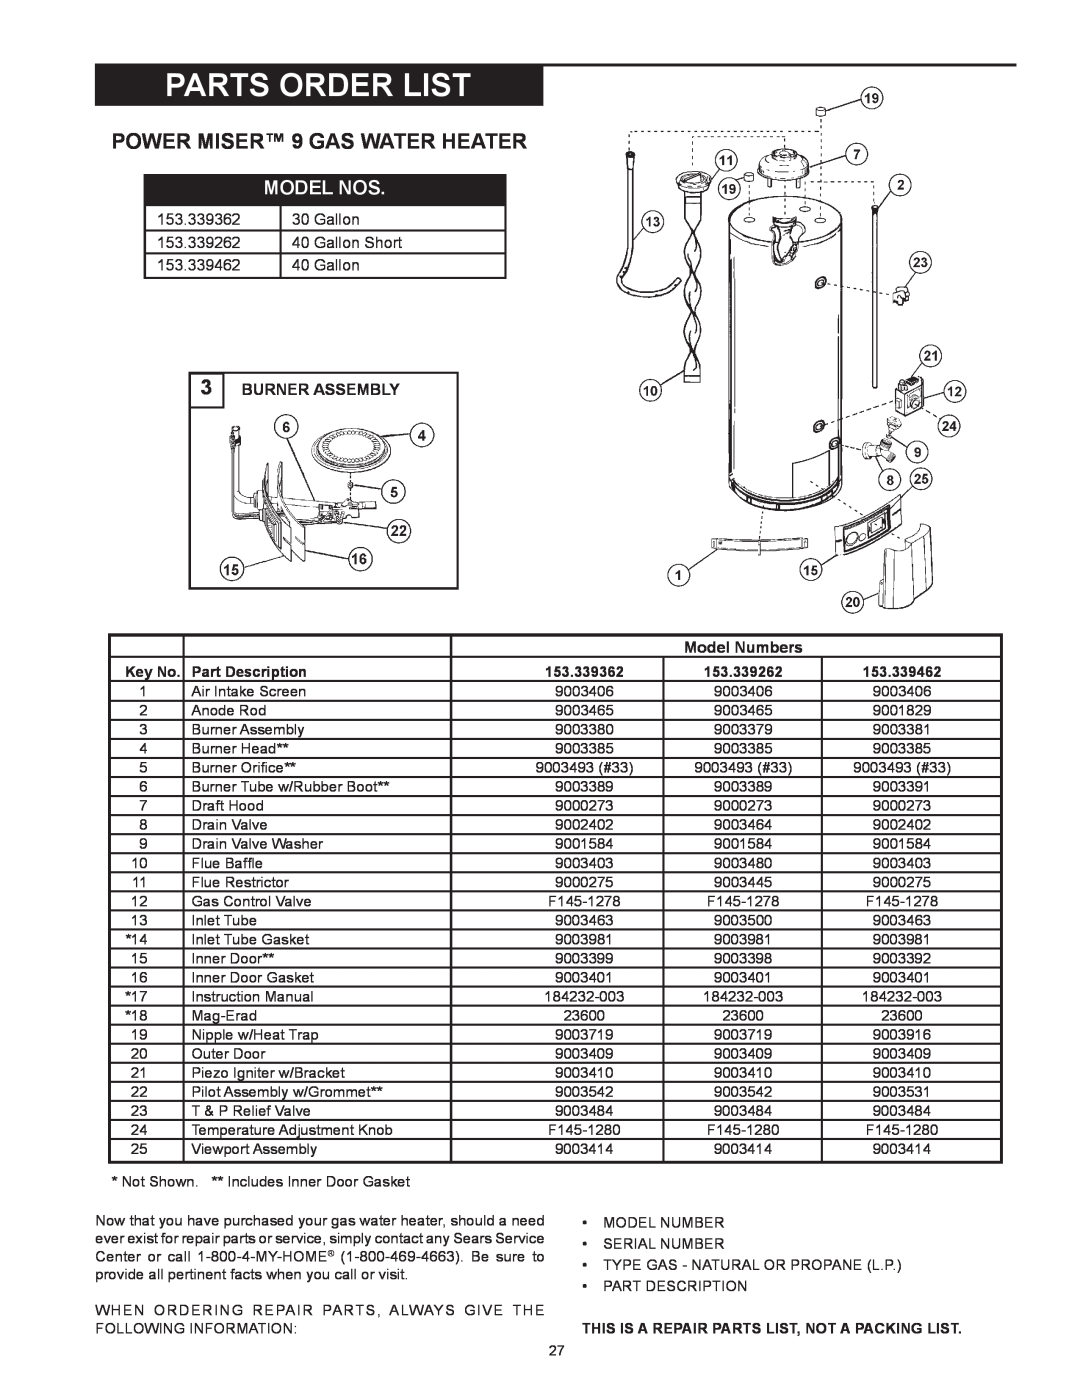 Kenmore 153.33968, 153.339562 Parts Order List, POWER MISER 9 GAS WATER HEATER, Model Nos, Burner Assembly, Model Numbers 